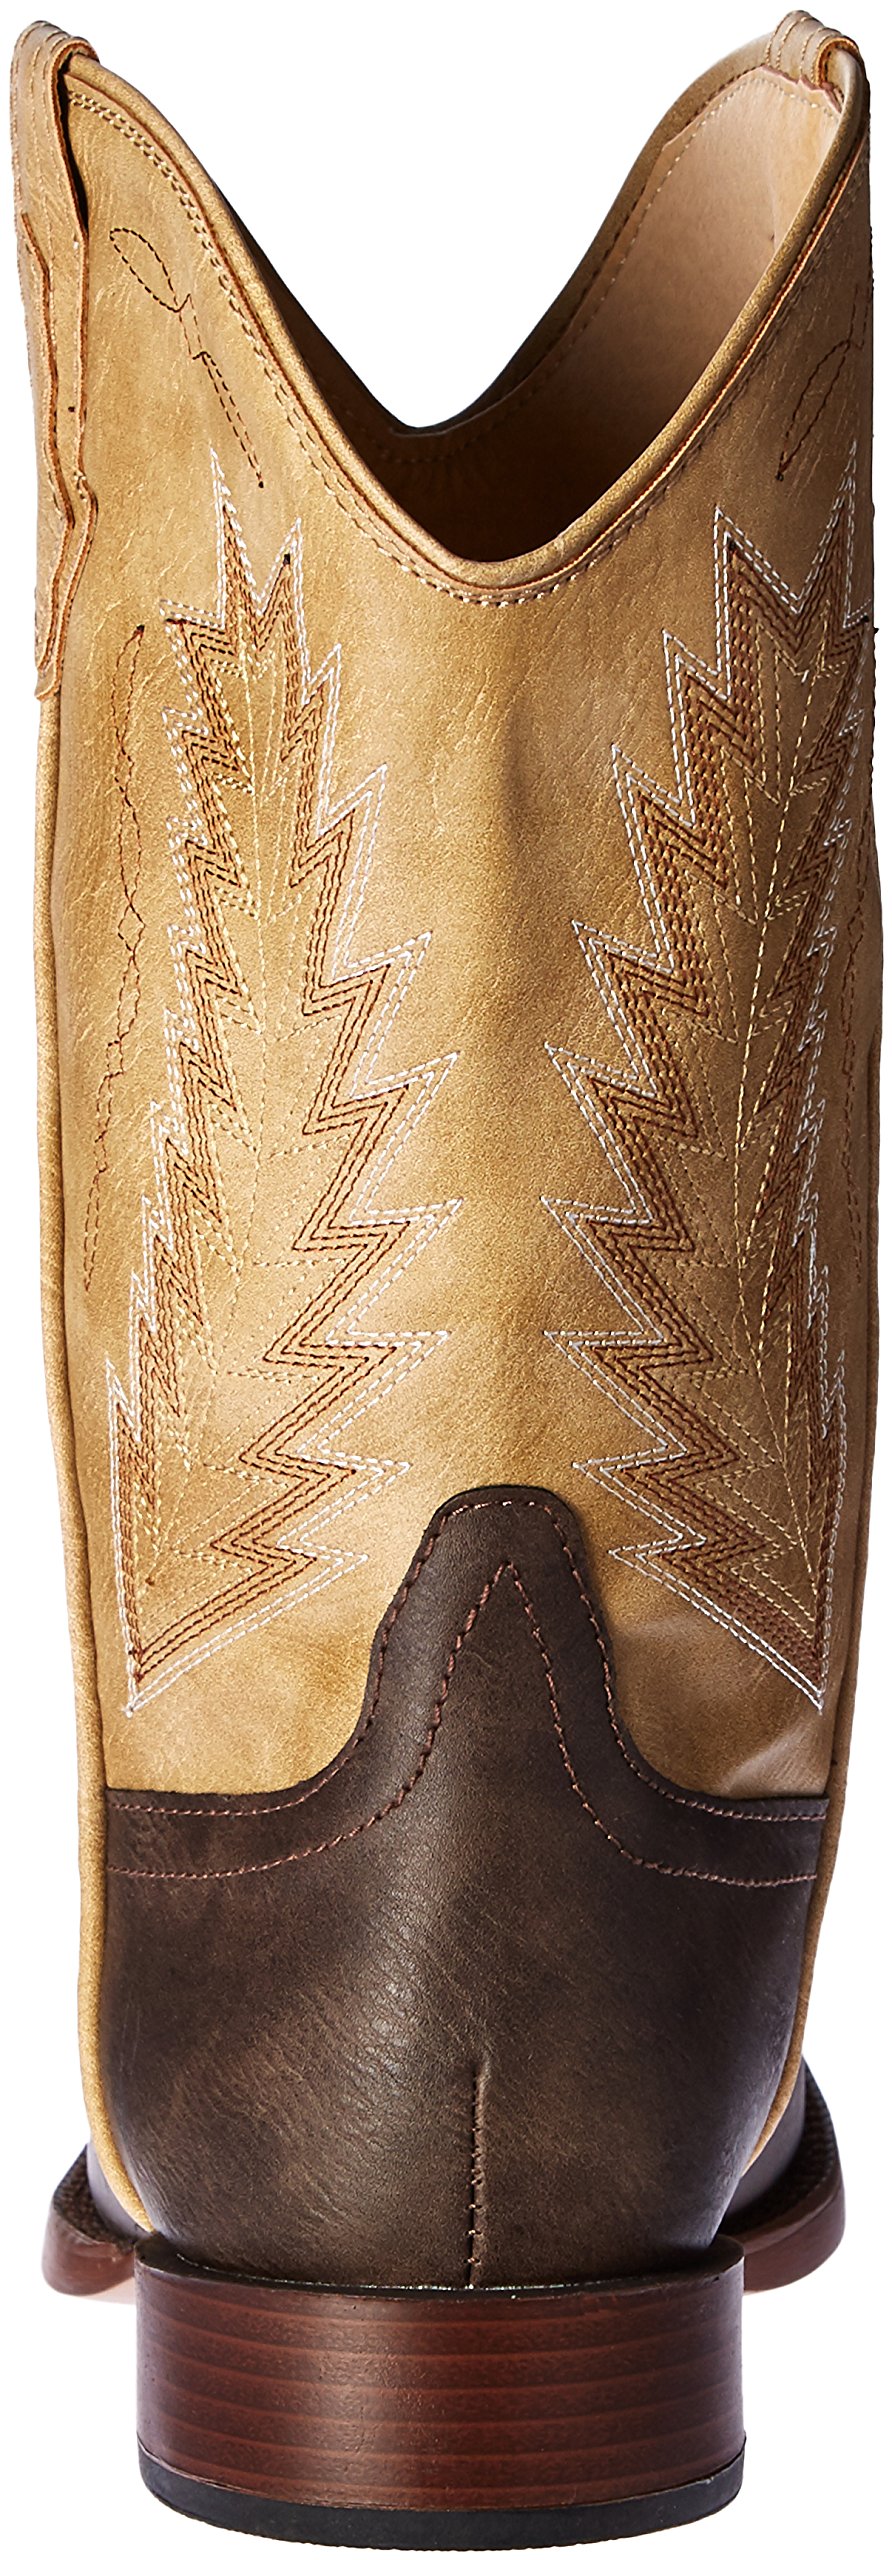 ROPER Western Boots Infant Boys Zipper Stitch Tan 09-017-1900-0079 BR